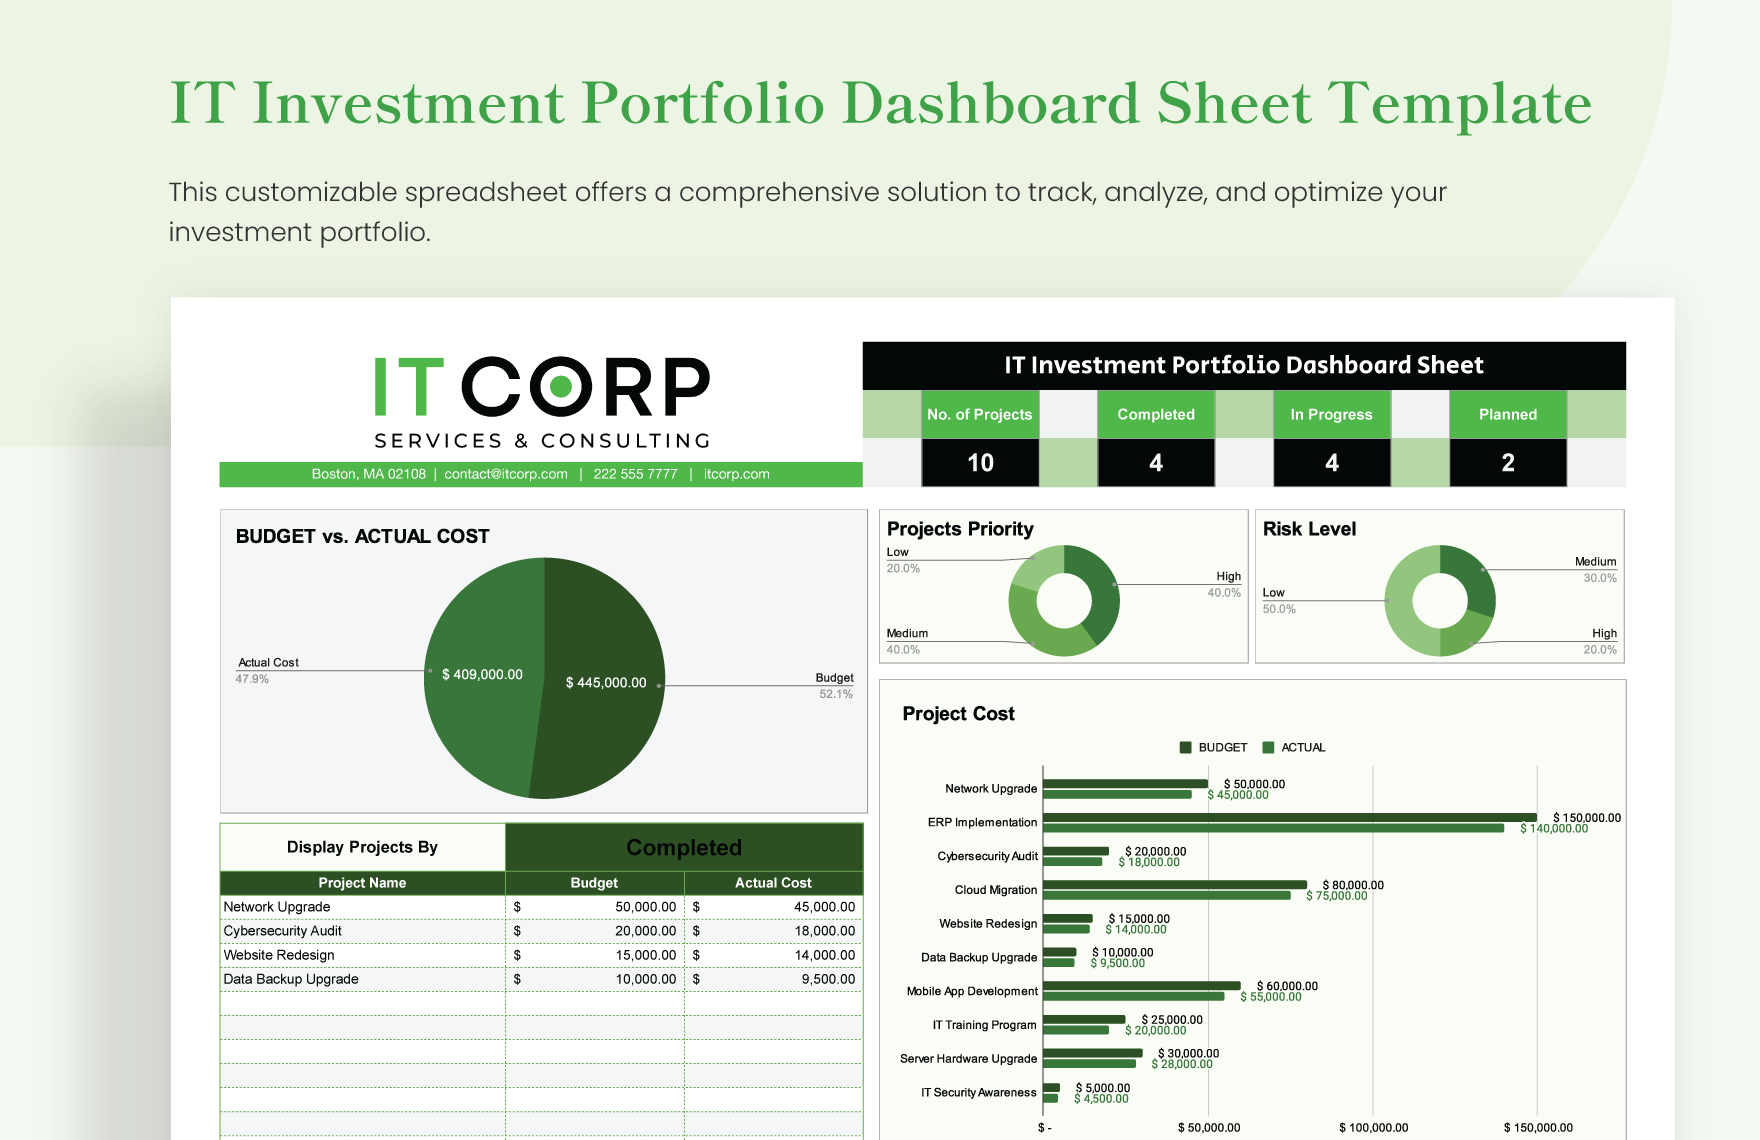 IT Investment Portfolio Dashboard Sheet Template